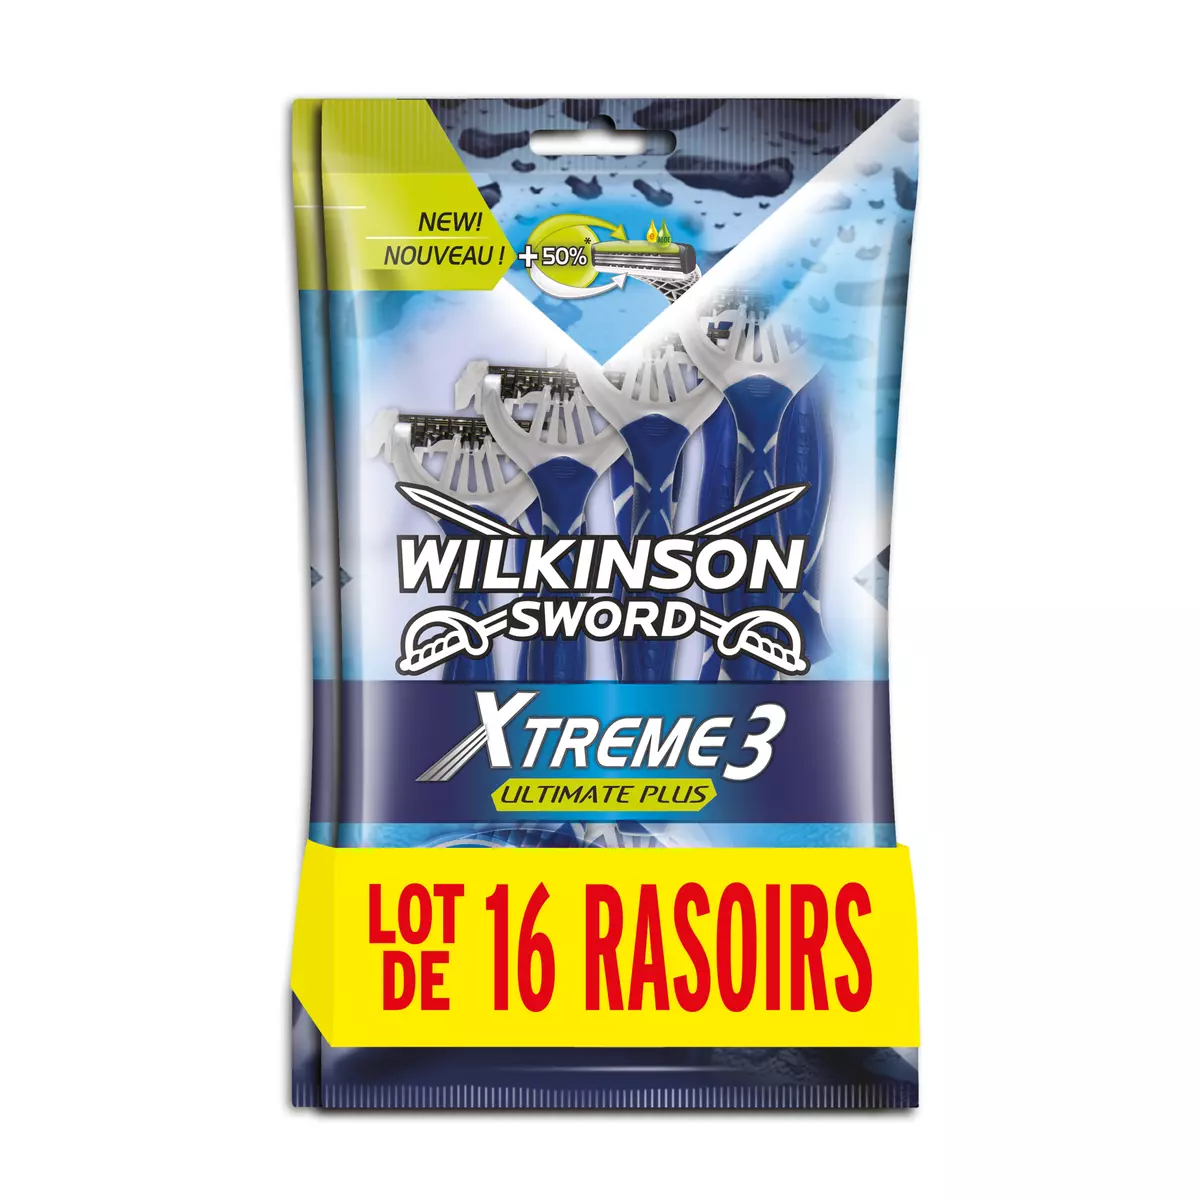 WILKINSON Xtreme 3 Ultimate plus rasoirs jetables 16 rasoirs